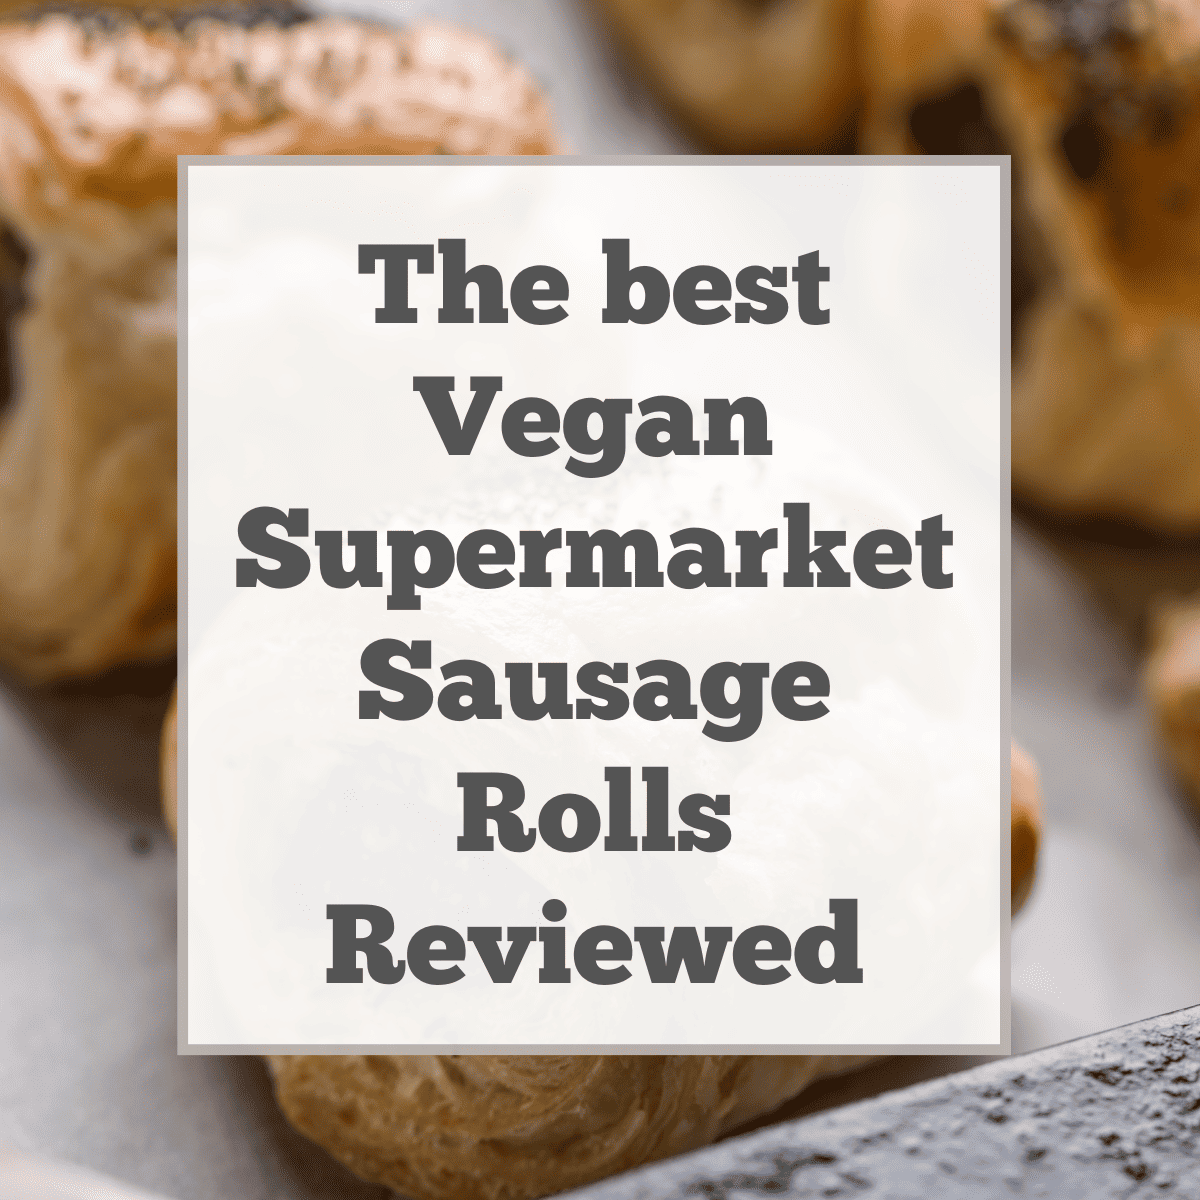 Review of best vegan sausage rolls in UK supermarkets.